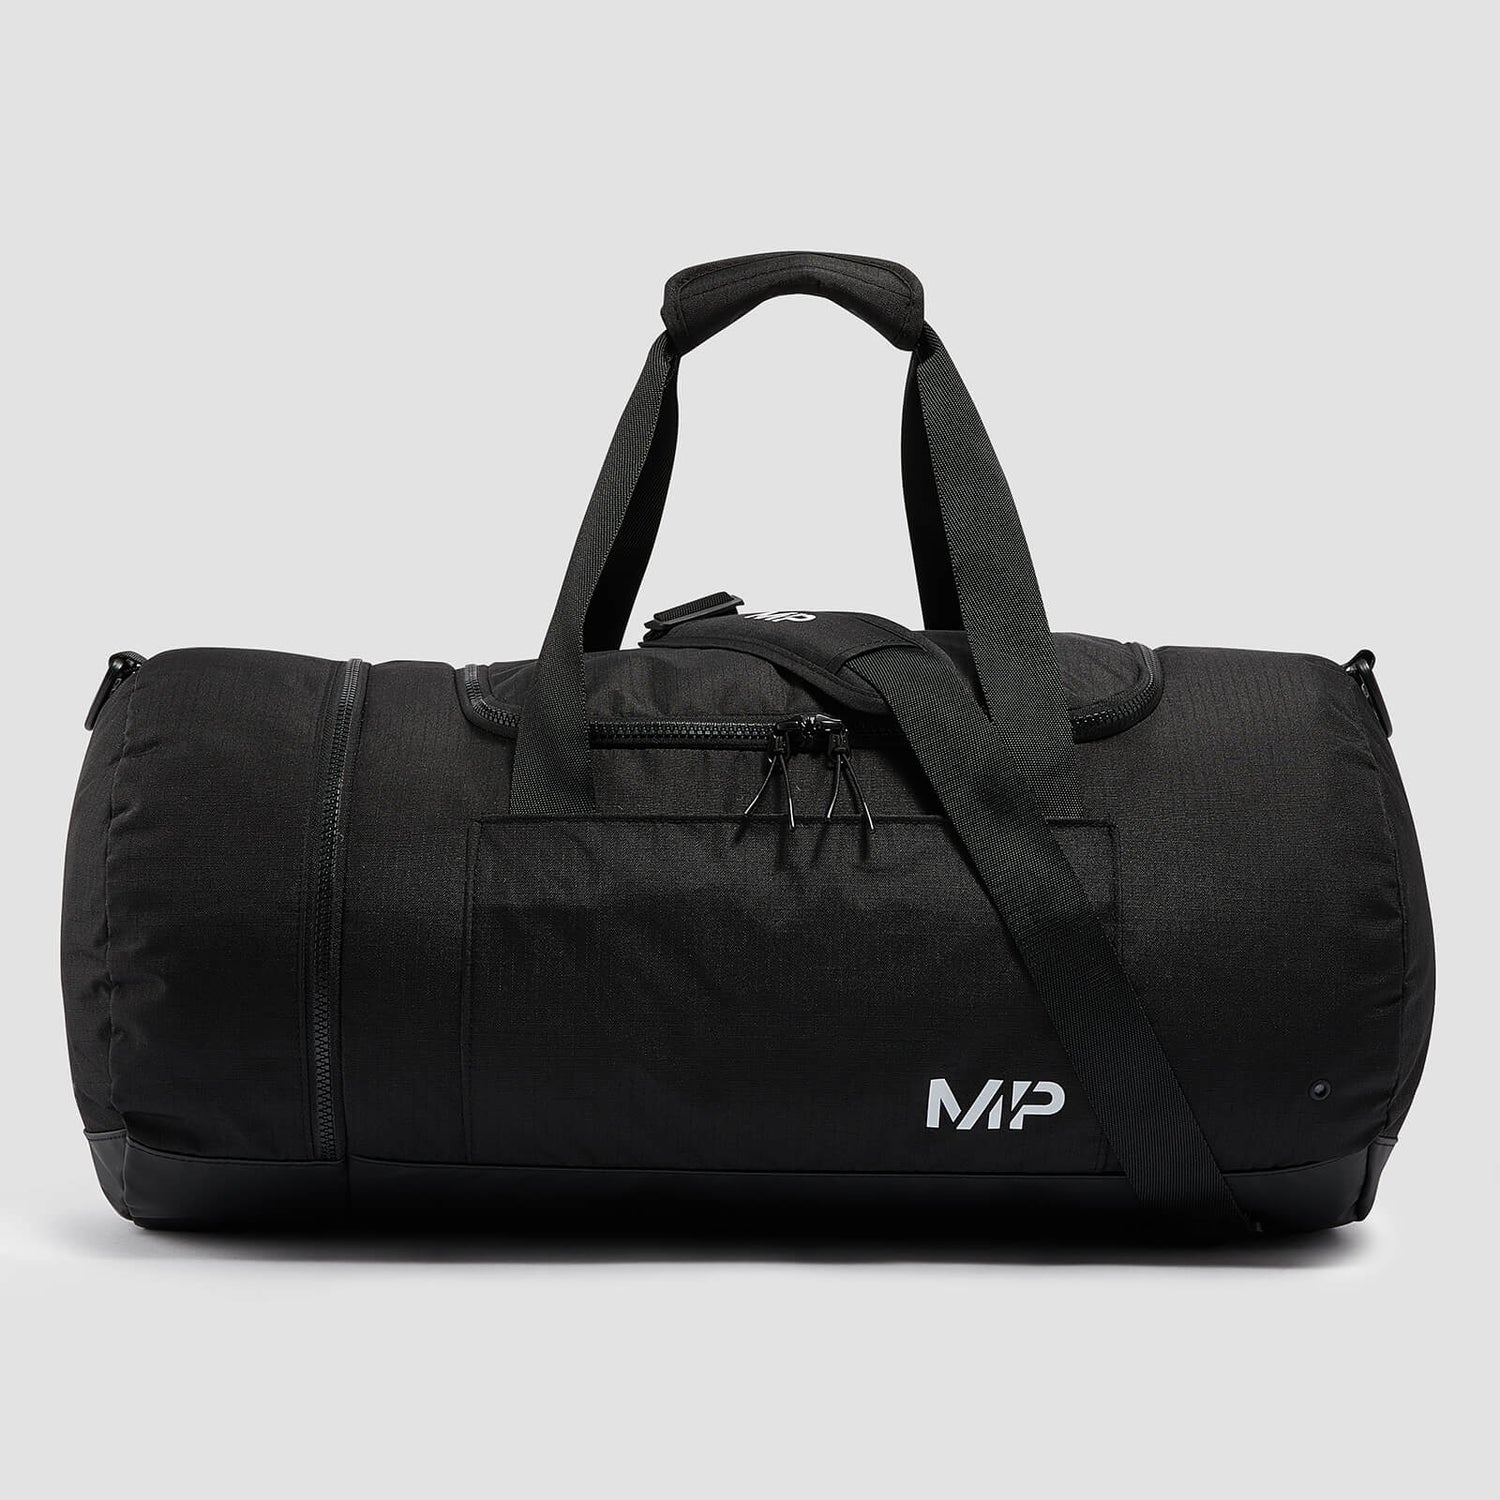 MP Duffle Bag - Black